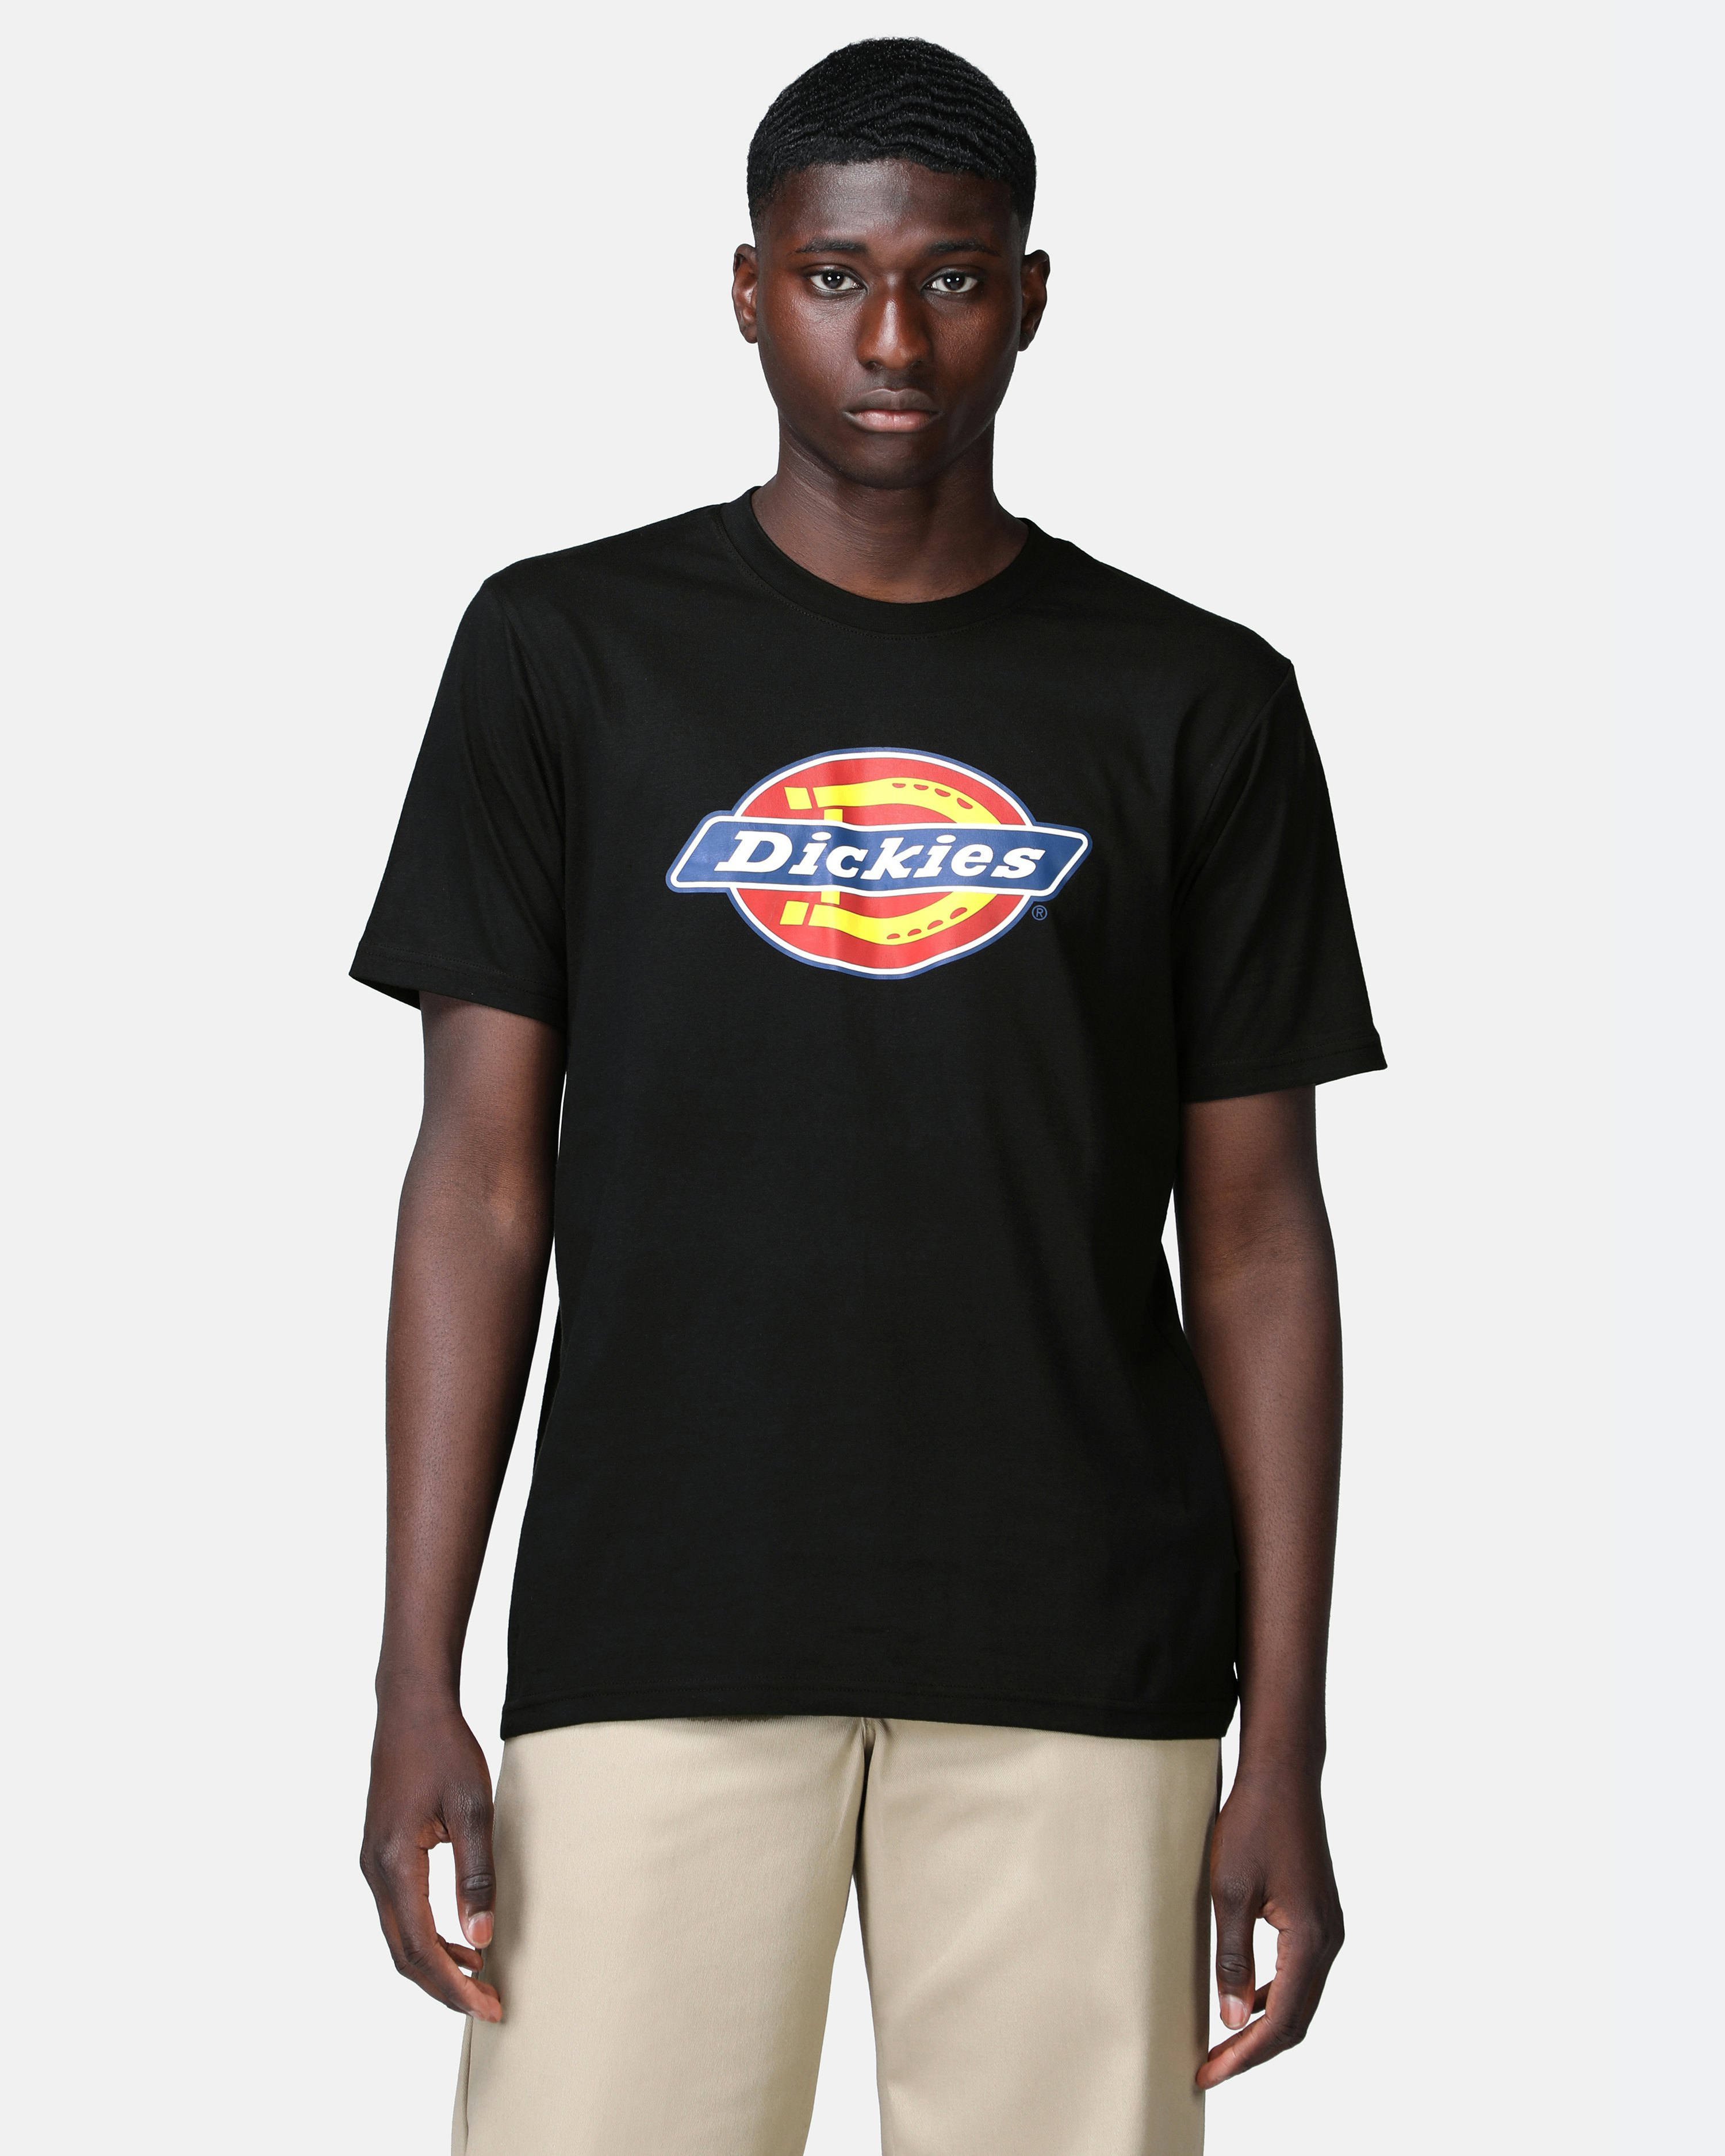 Smelte Conform At interagere Dickies T-shirt - Icon Black | Men | Junkyard